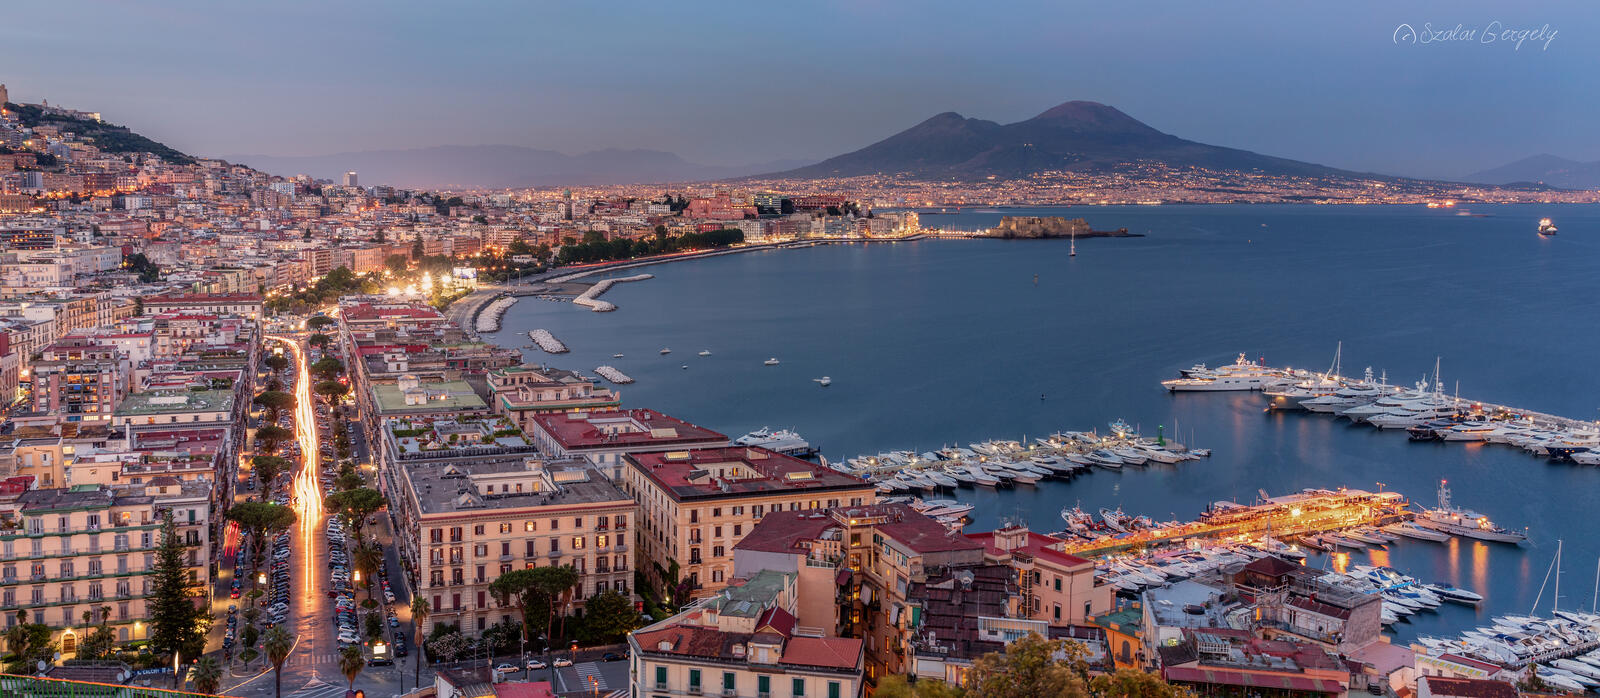 Wallpapers panorama Napoli Naples on the desktop